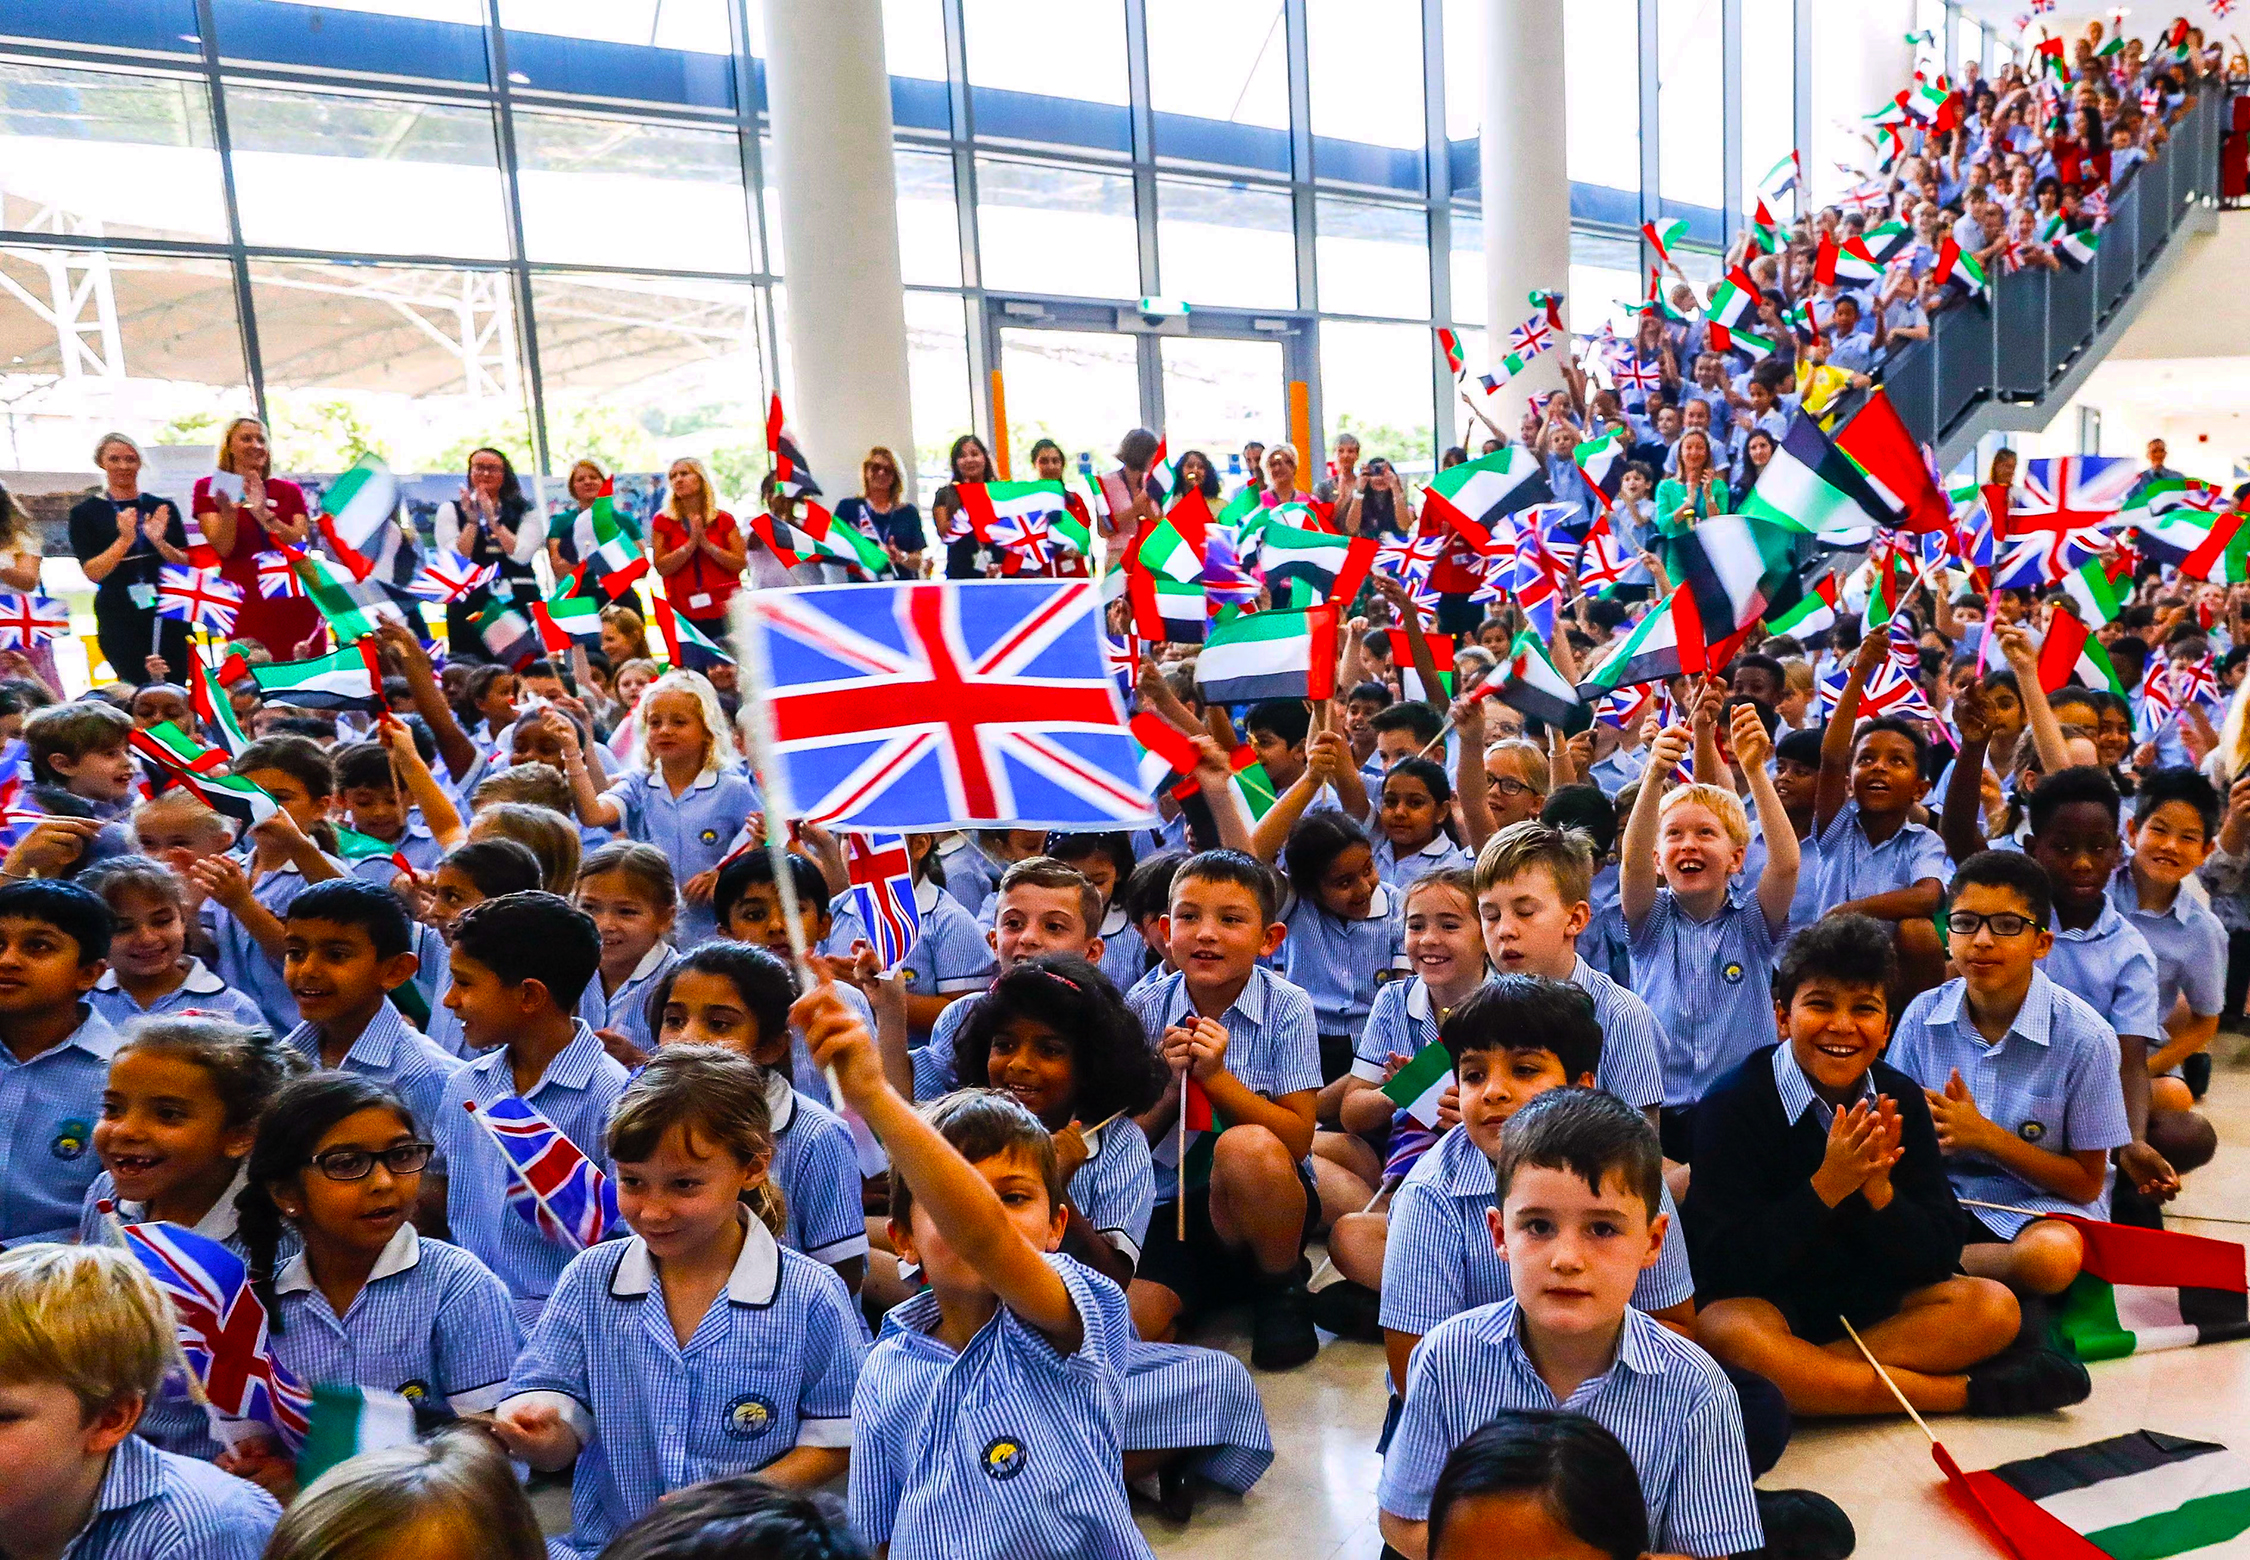 Top Schools Award for Best British School in the UAE awarded to The British School Al Khubairat